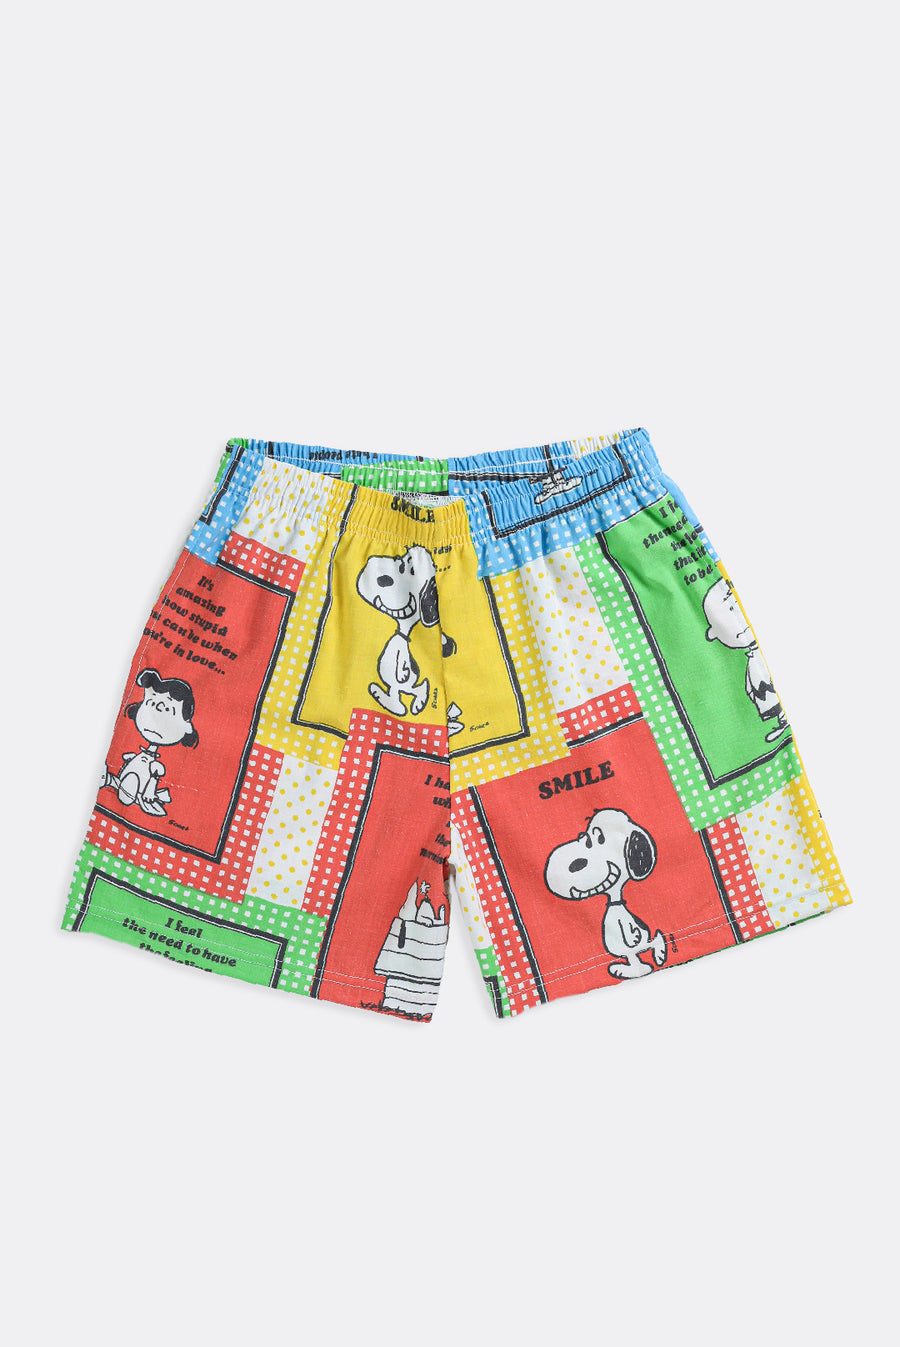 Unisex Rework Charlie Brown Boxer Shorts- S, M, L